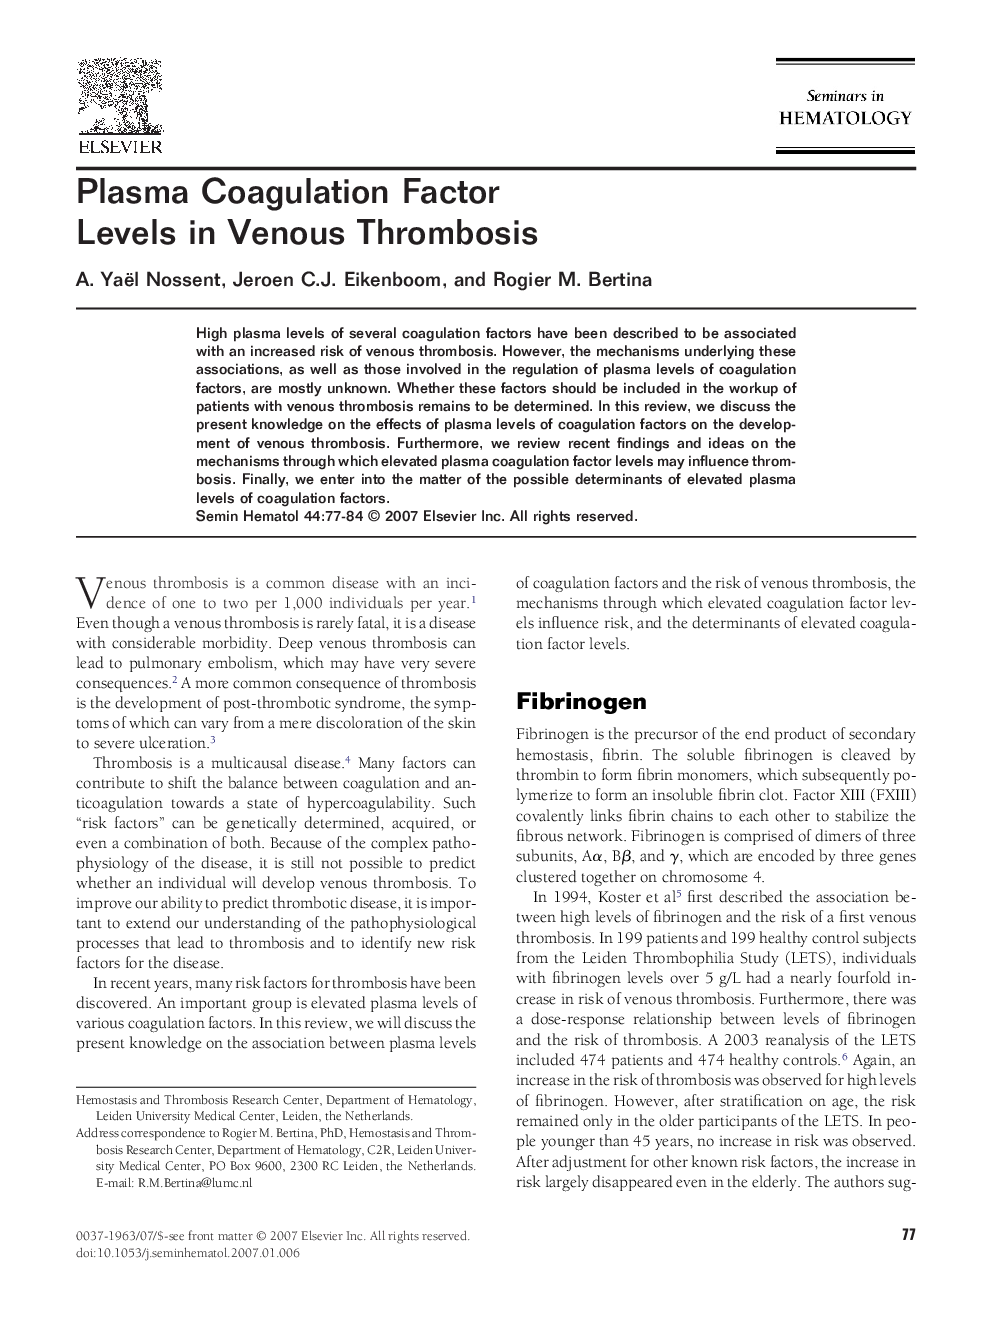 Plasma Coagulation Factor Levels in Venous Thrombosis